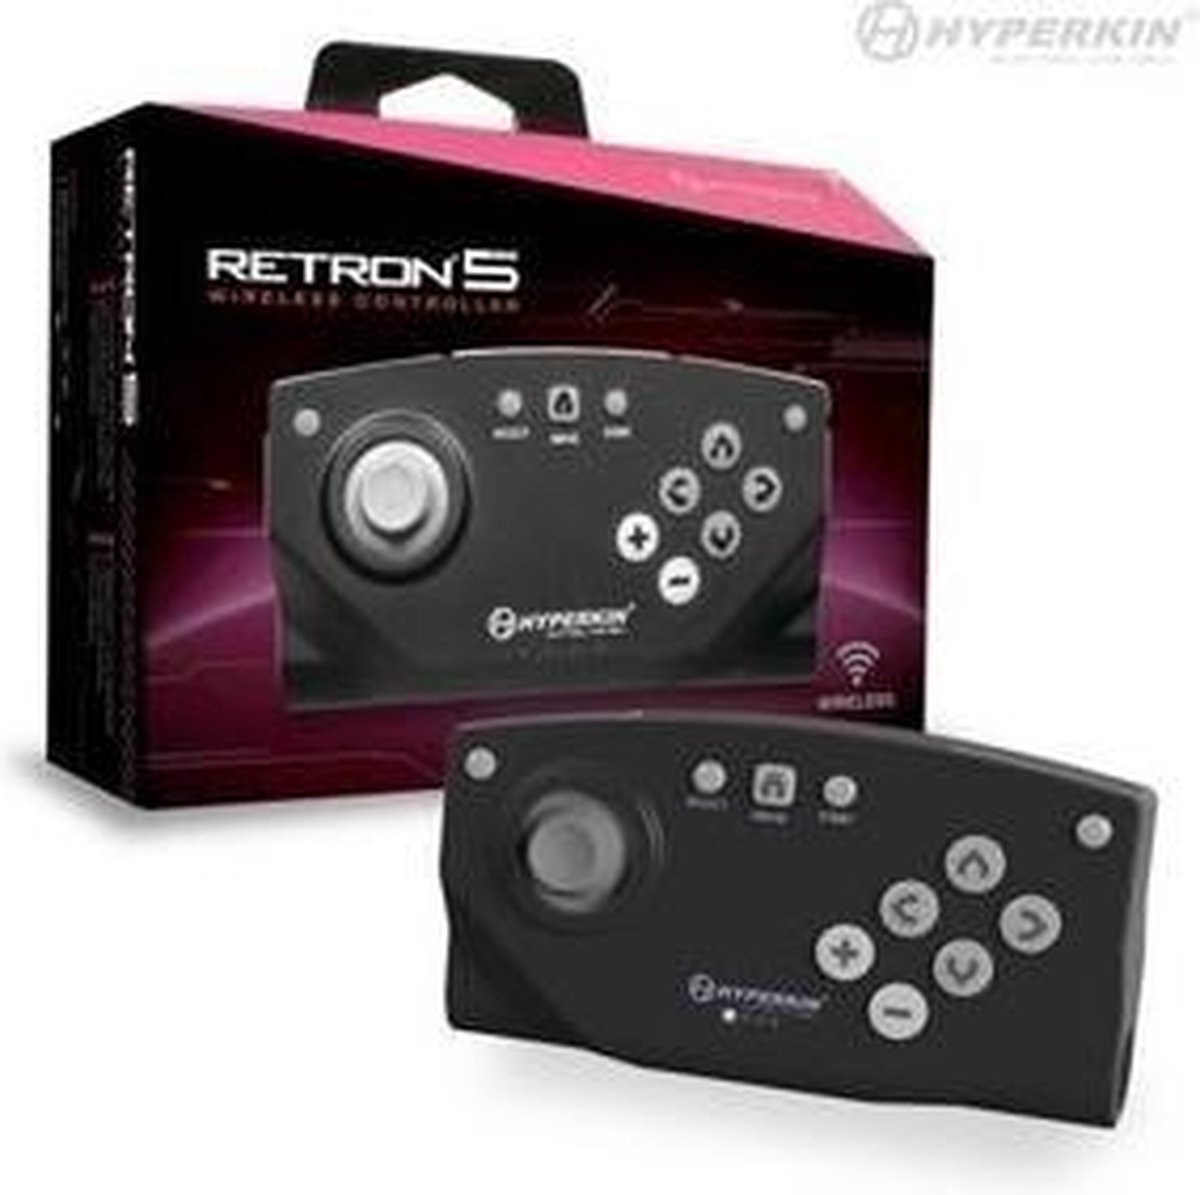 RetroN 5 Wireless Controller (Black) - Hyperkin